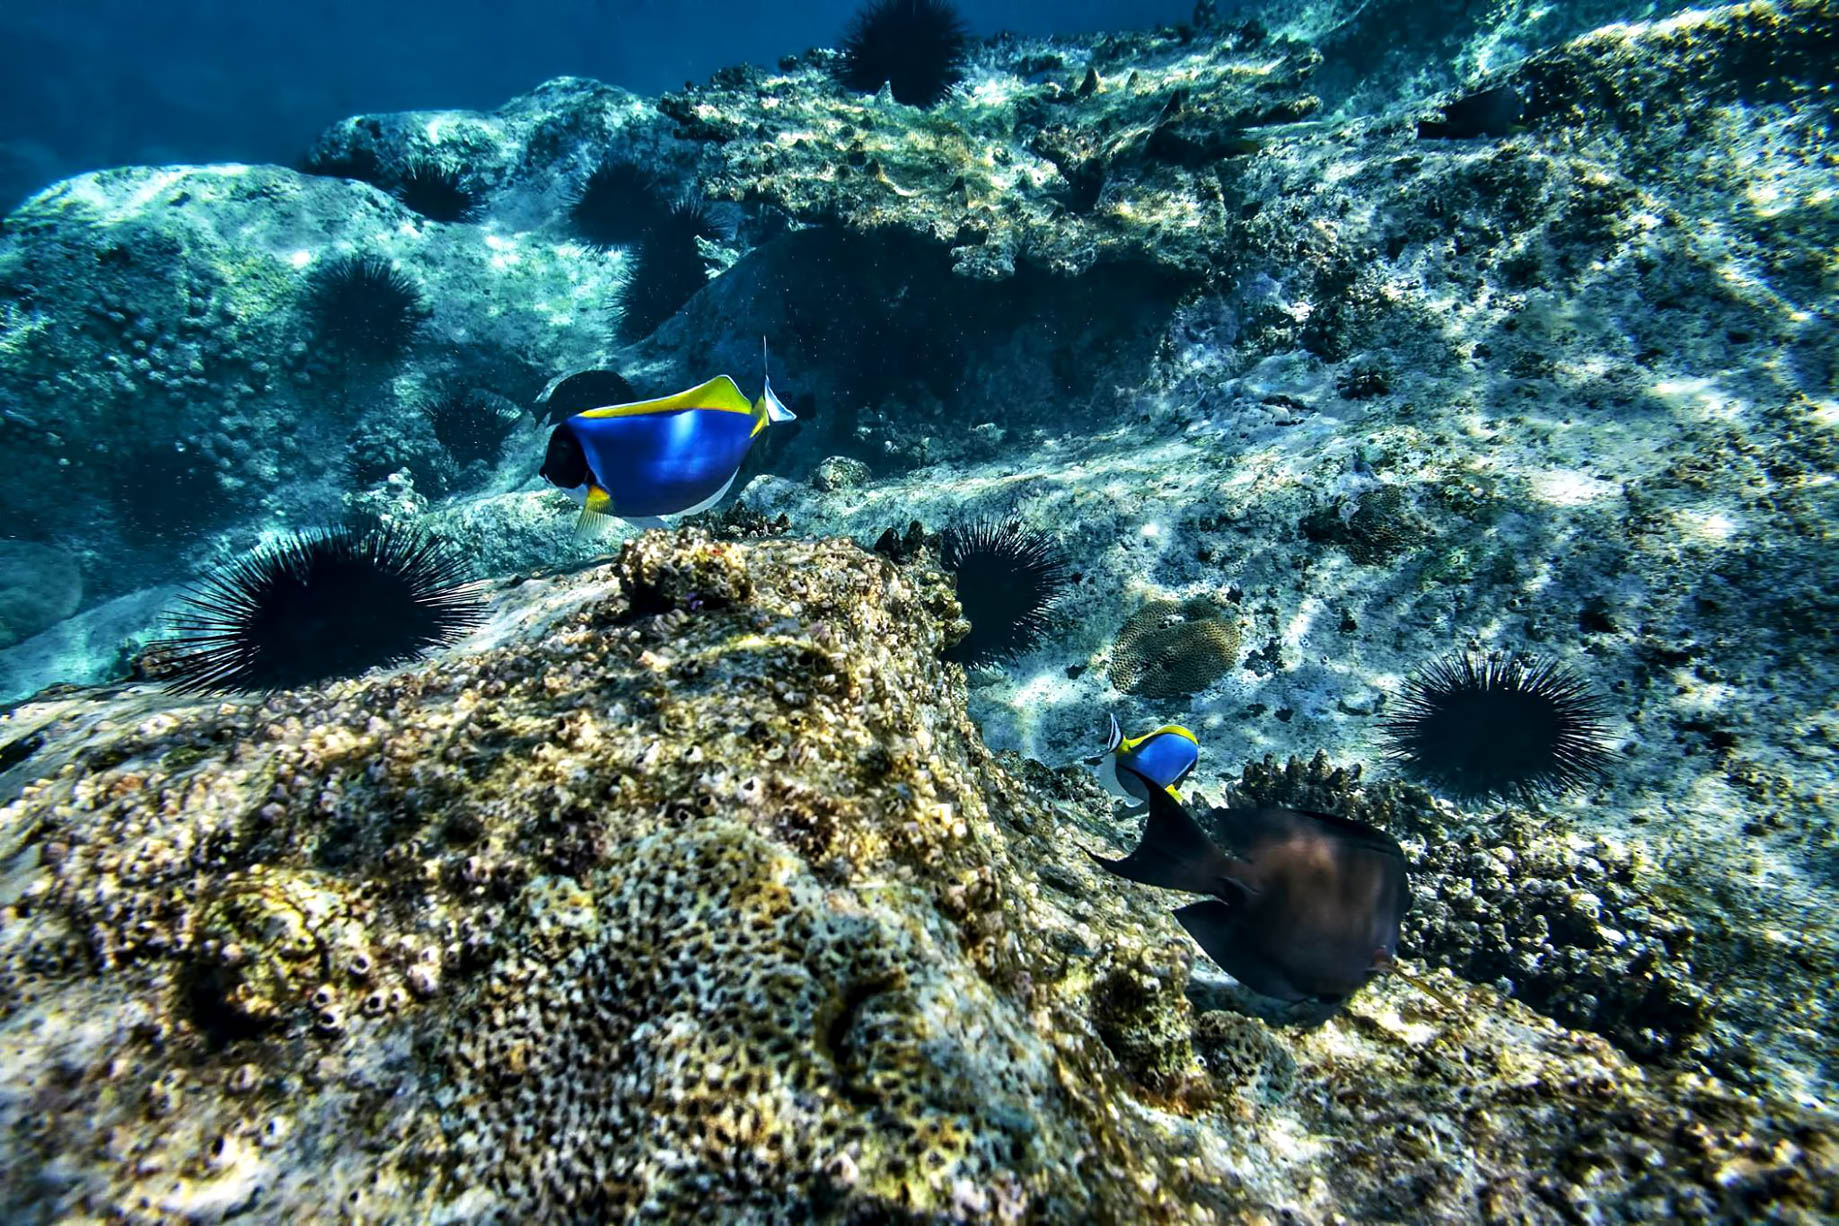 Six Senses Zil Pasyon Resort – Felicite Island, Seychelles – Tropical Fish Underwater